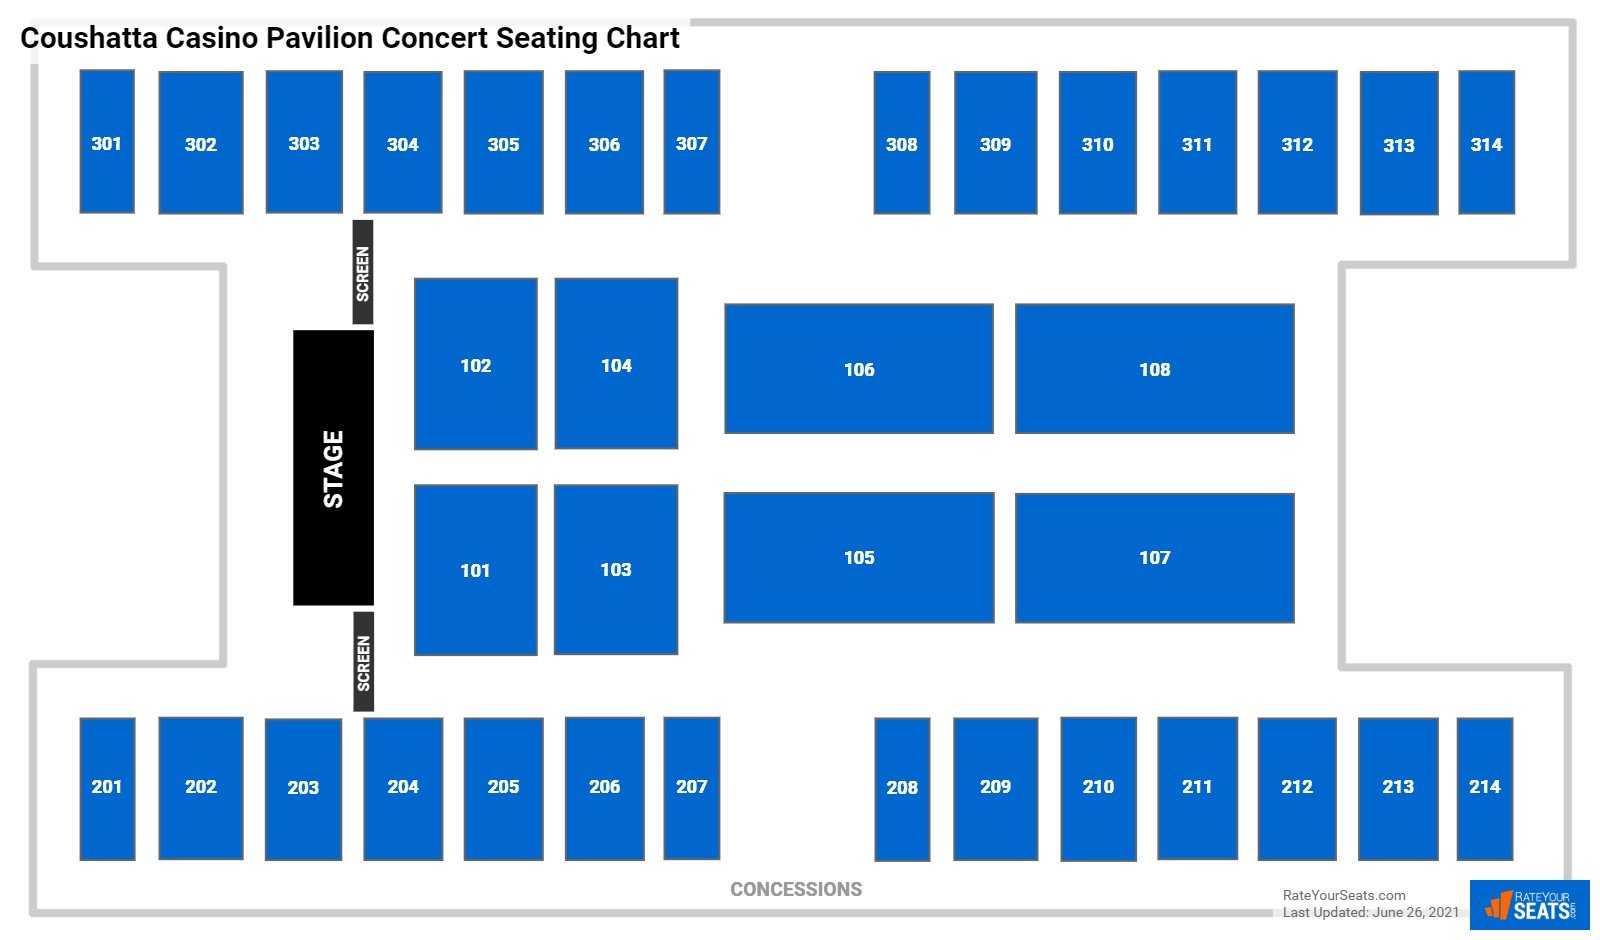 Coushatta Casino Pavilion Concert Seating Chart